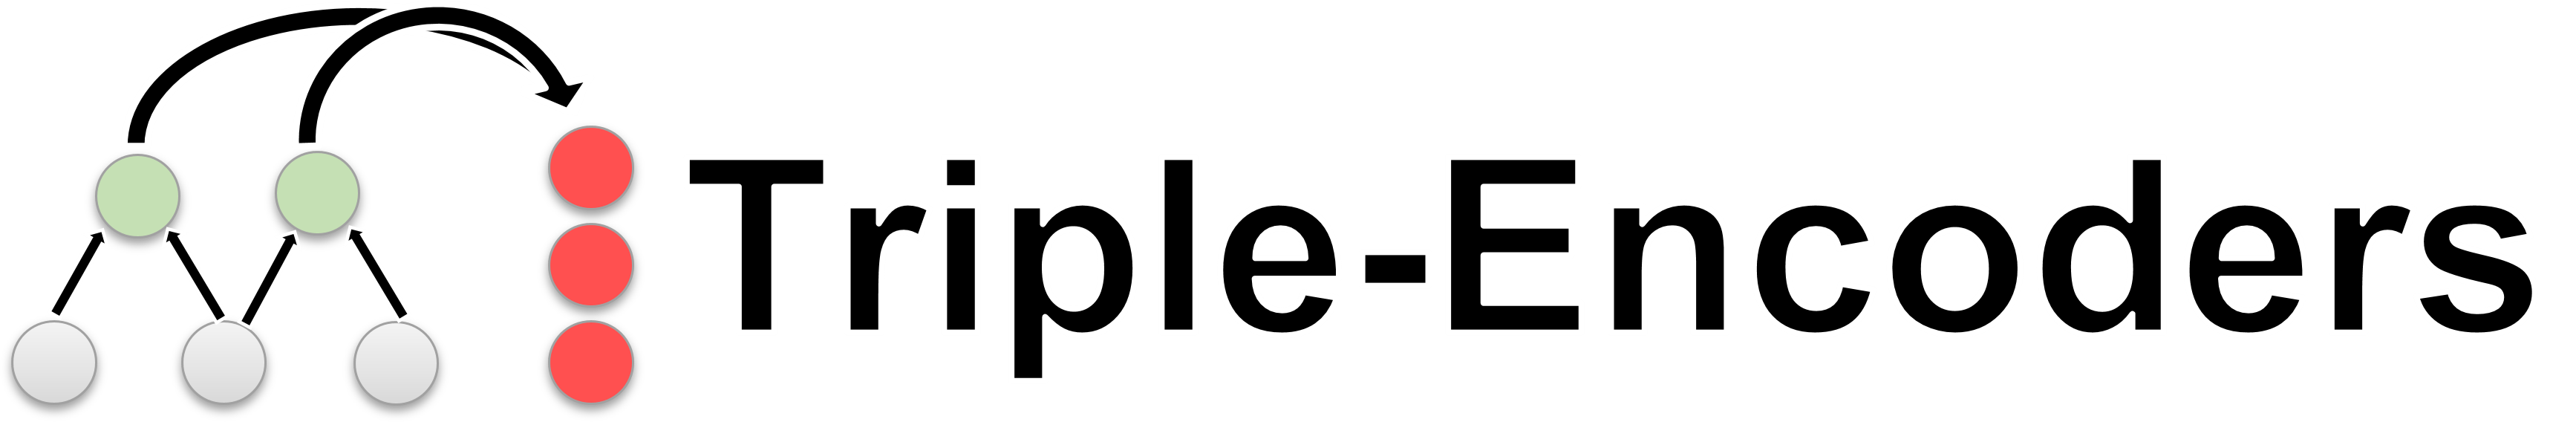 triple-encoder-logo_with_border.png